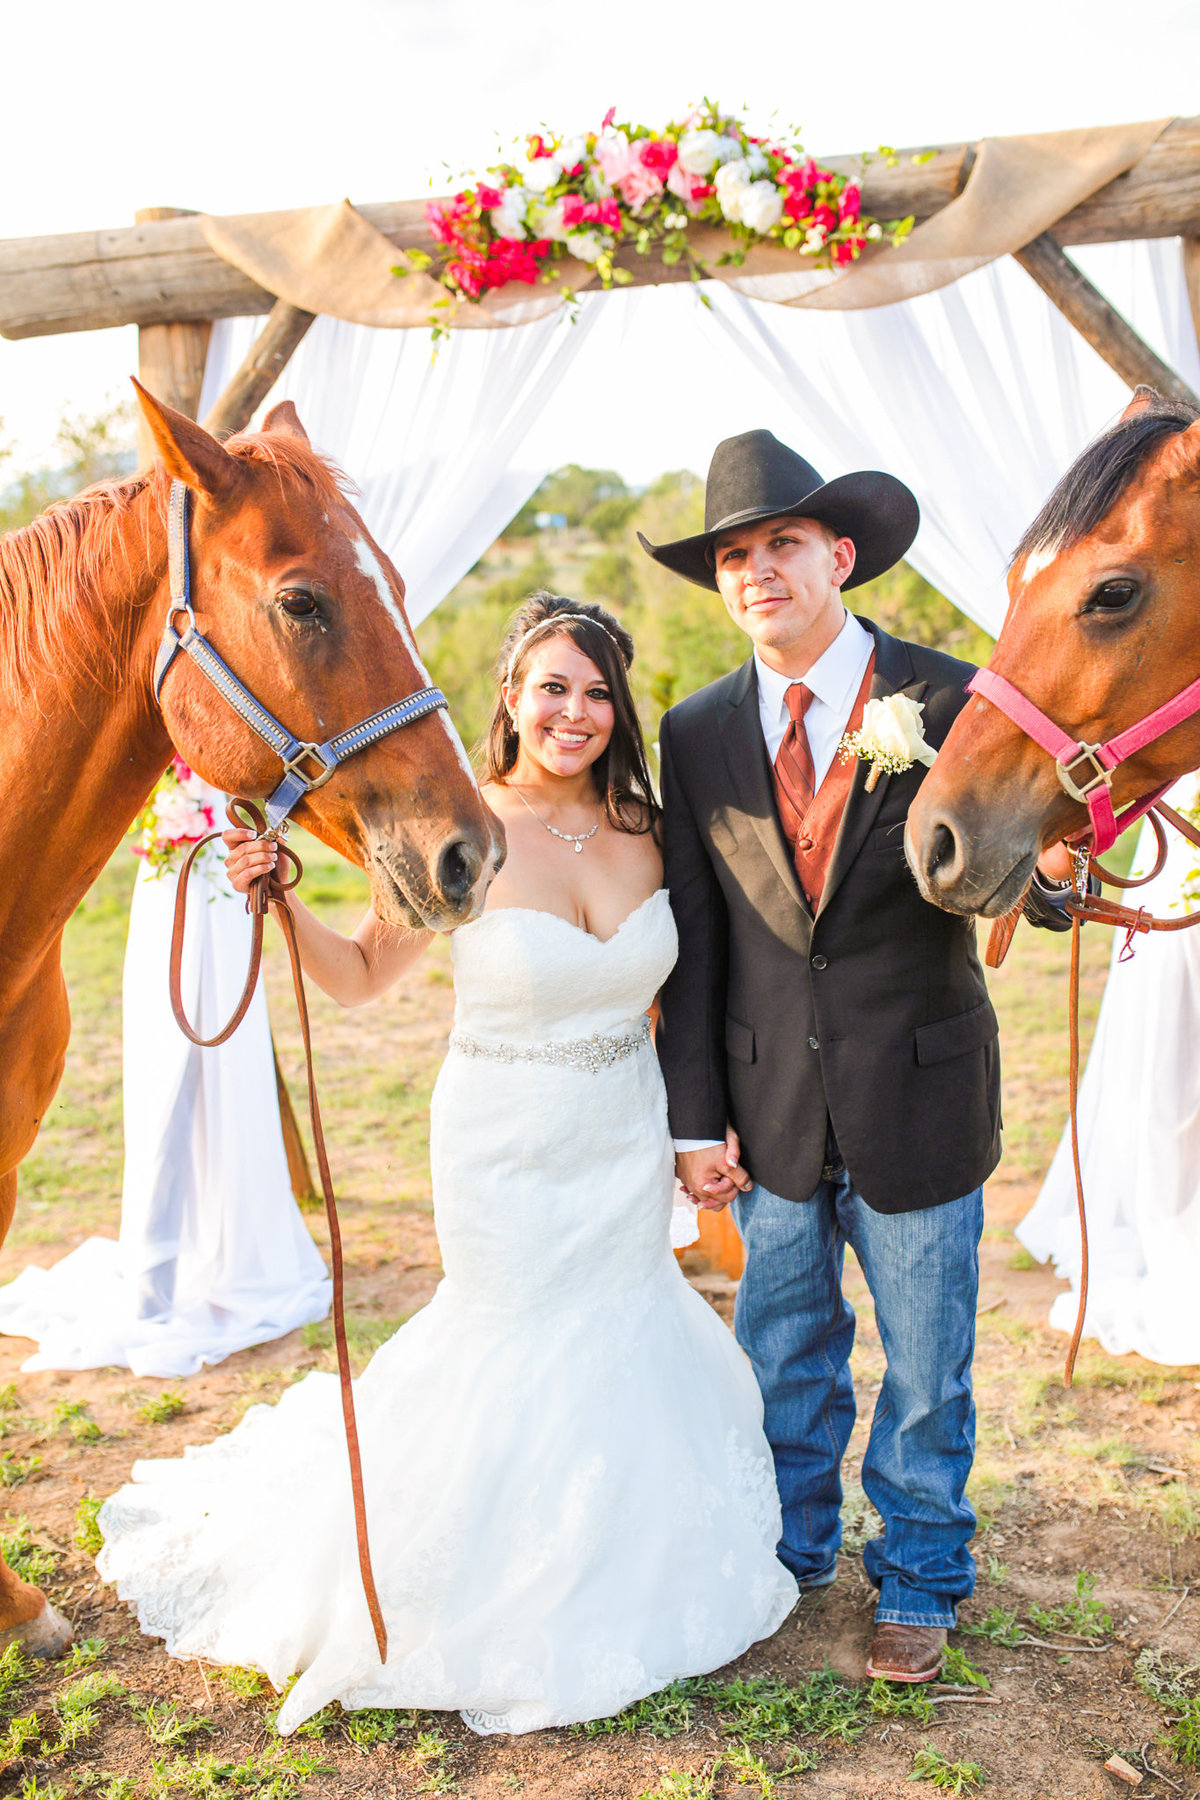 Edgewood-New-Mexico_Country-Wedding-Photographer_www.tylerbrooke.com_Kate-Kauffman-19-of-35-1